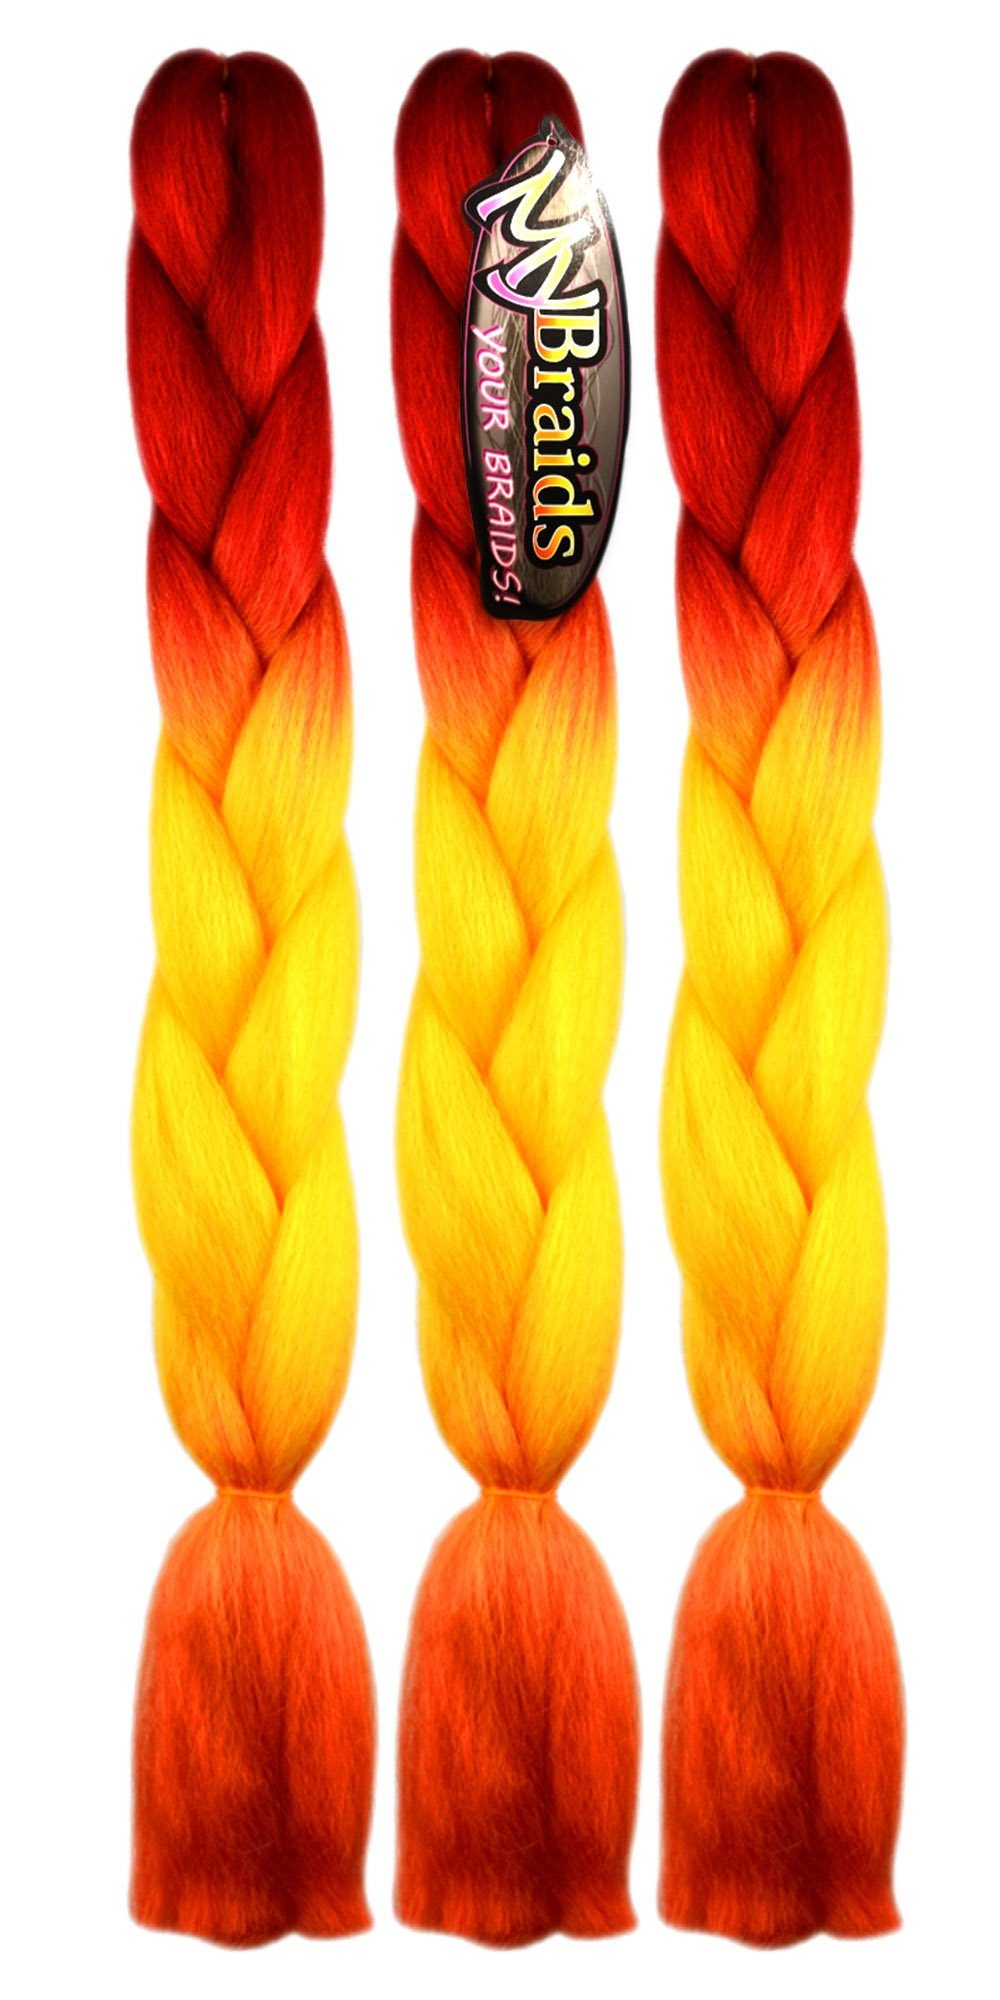 3-farbig 3er Kunsthaar-Extension MyBraids 31-CY Zöpfe Flechthaar YOUR BRAIDS! im Braids Rubinrot-Sonnengelb-Orange Jumbo Pack